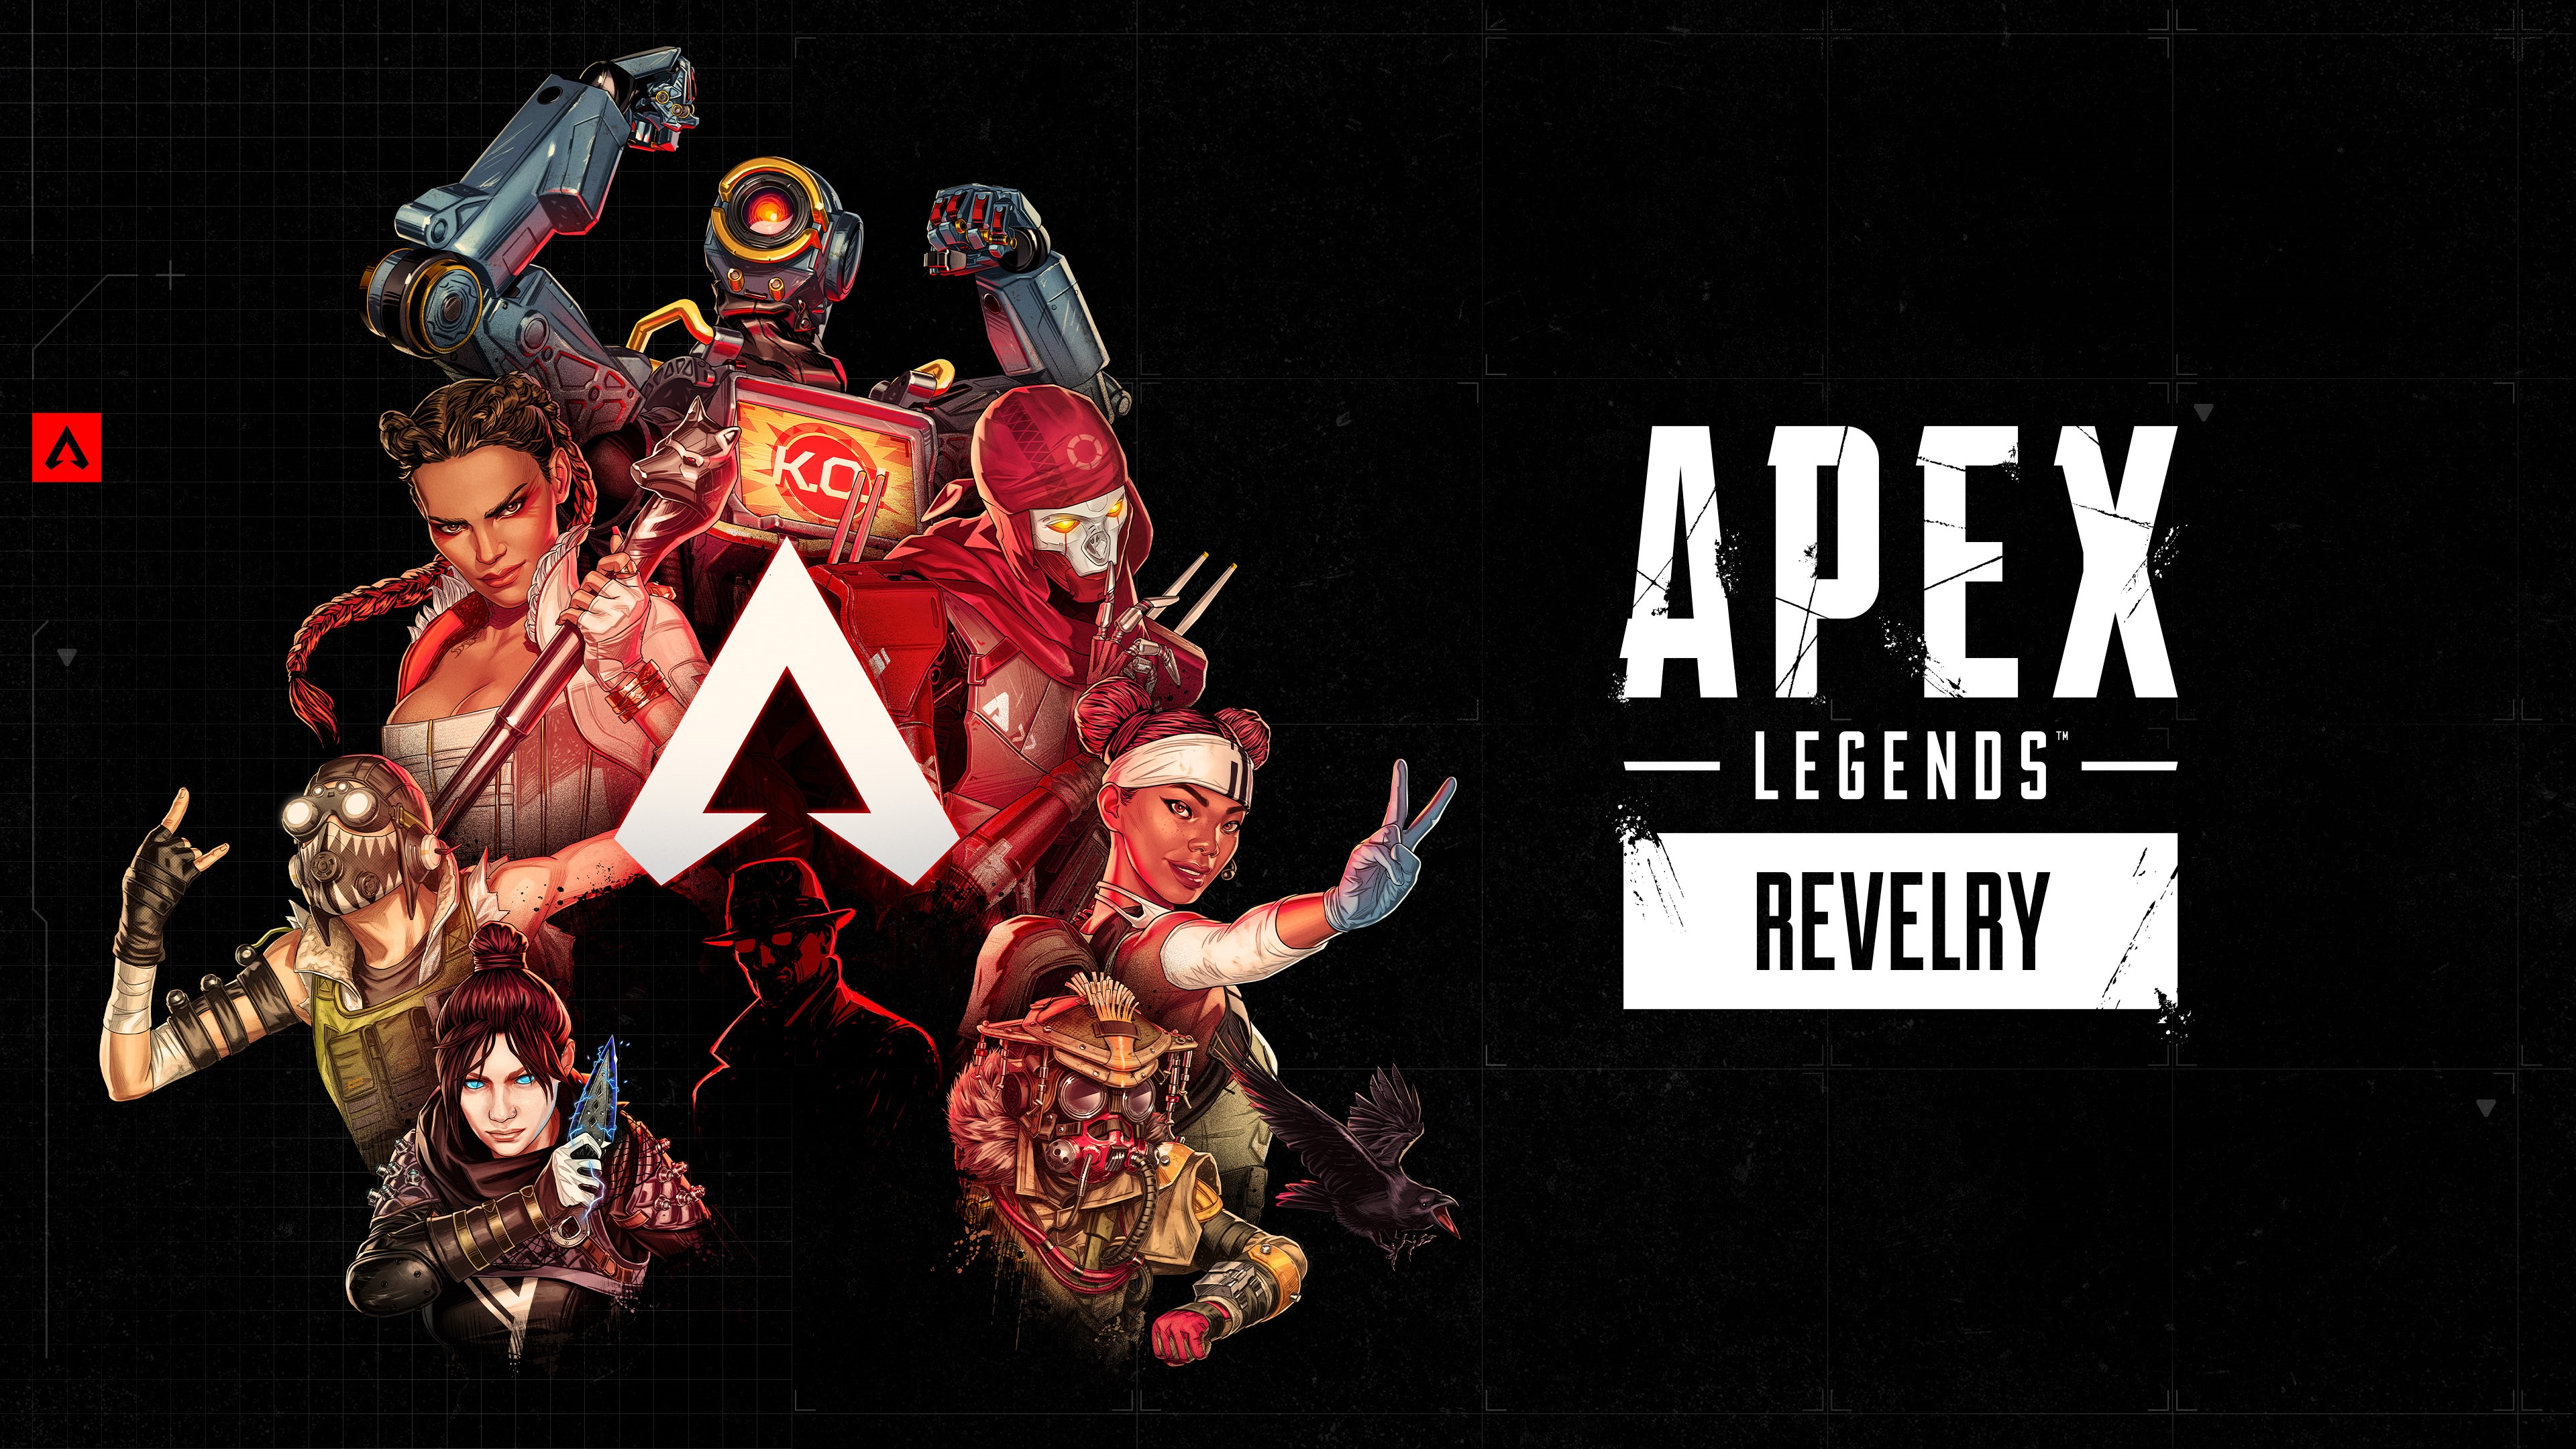 Apex Legends Mobile introduces a brand new legend alongside some more  details about Season 2